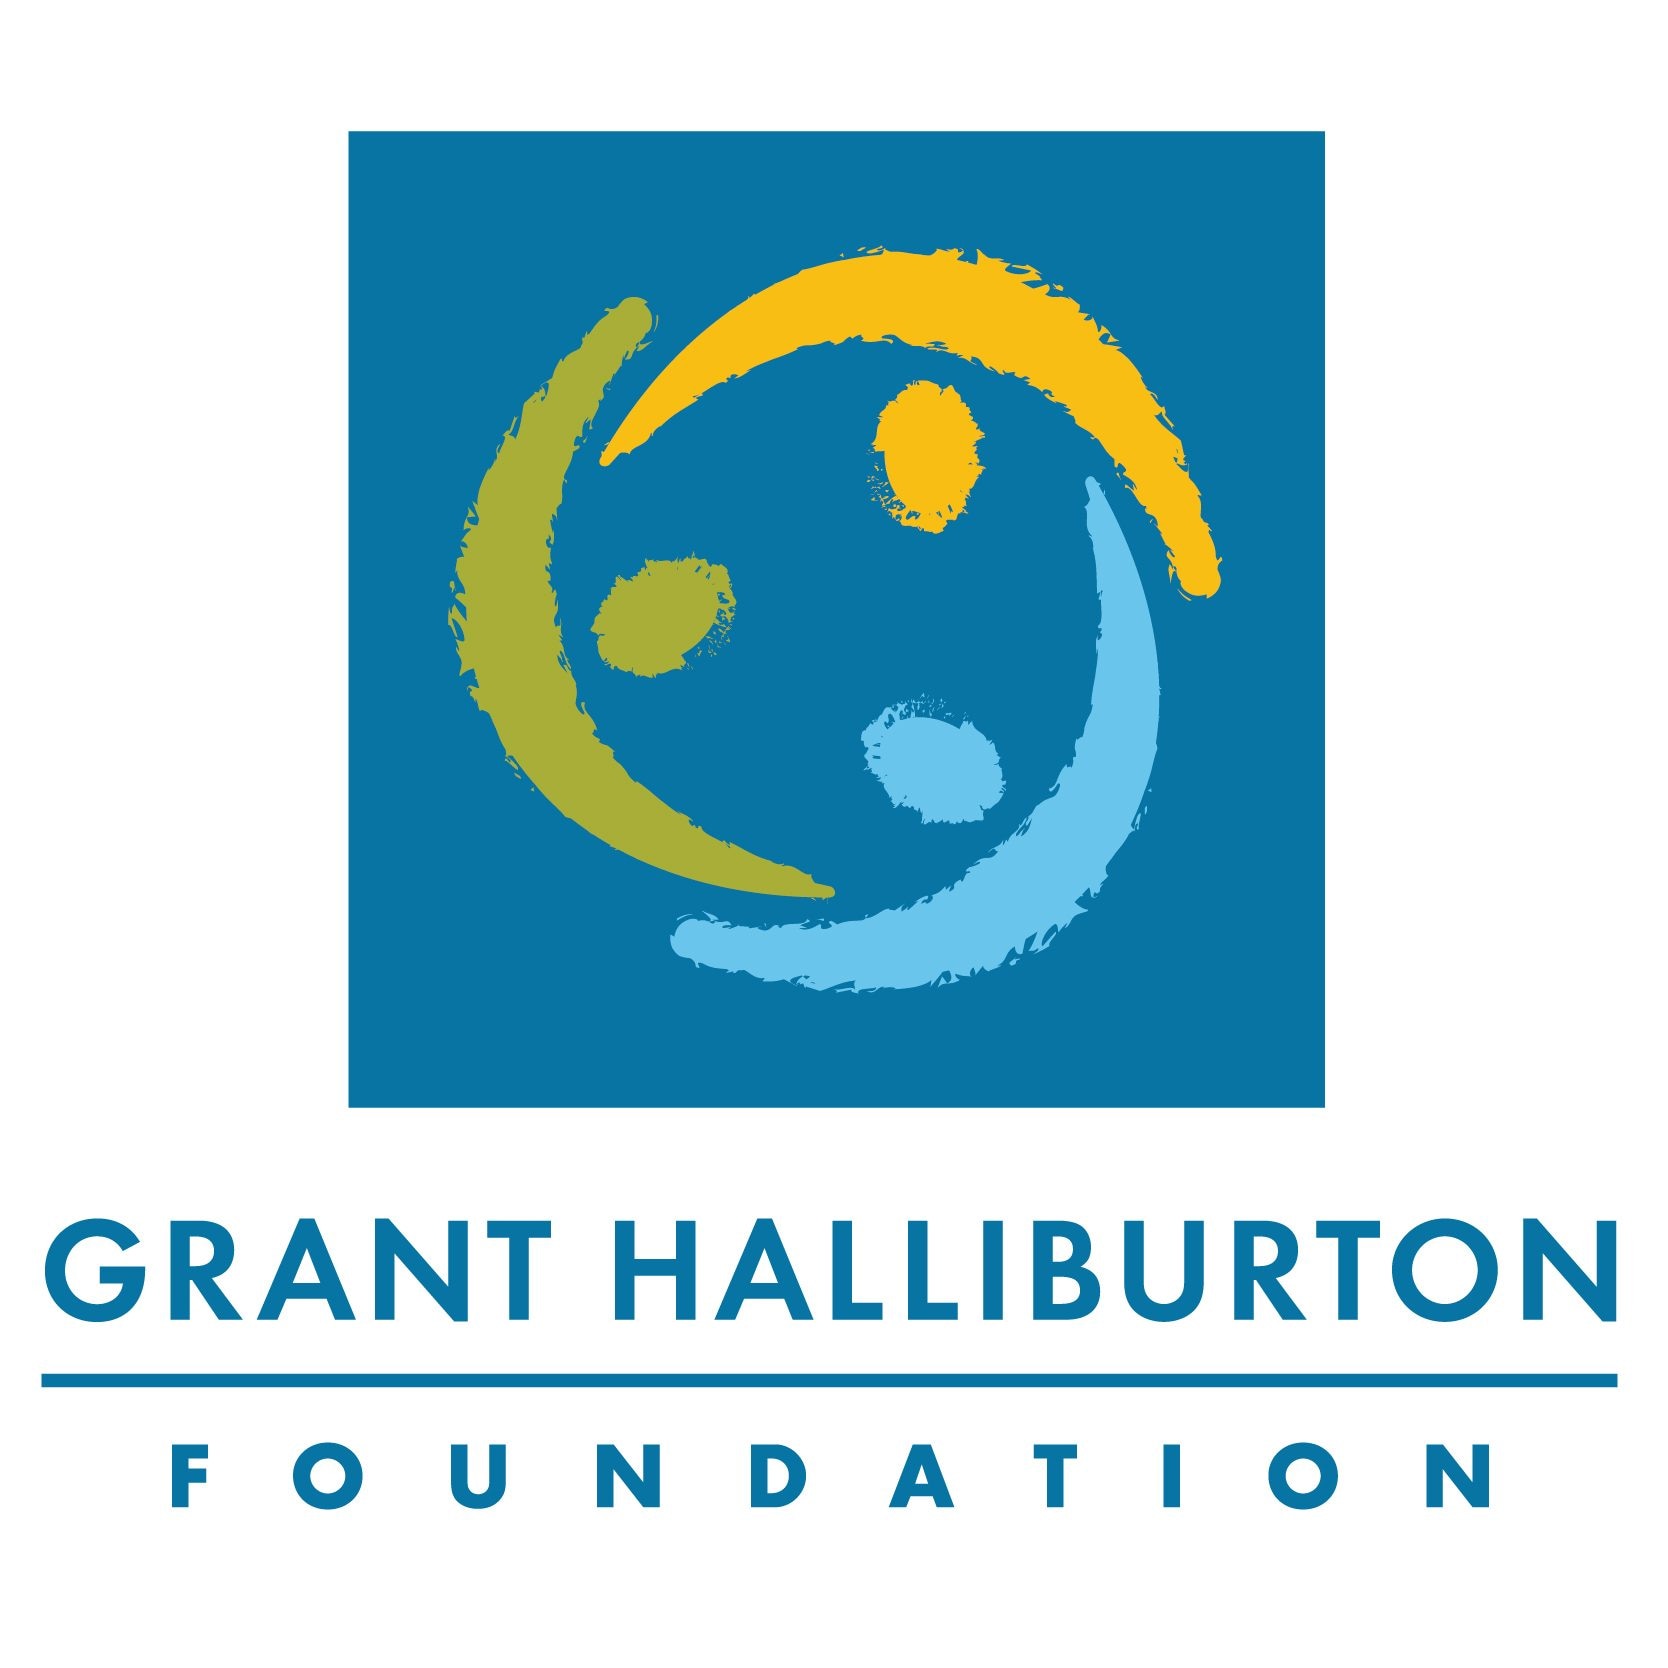 Grant Halliburton Foundation Inc